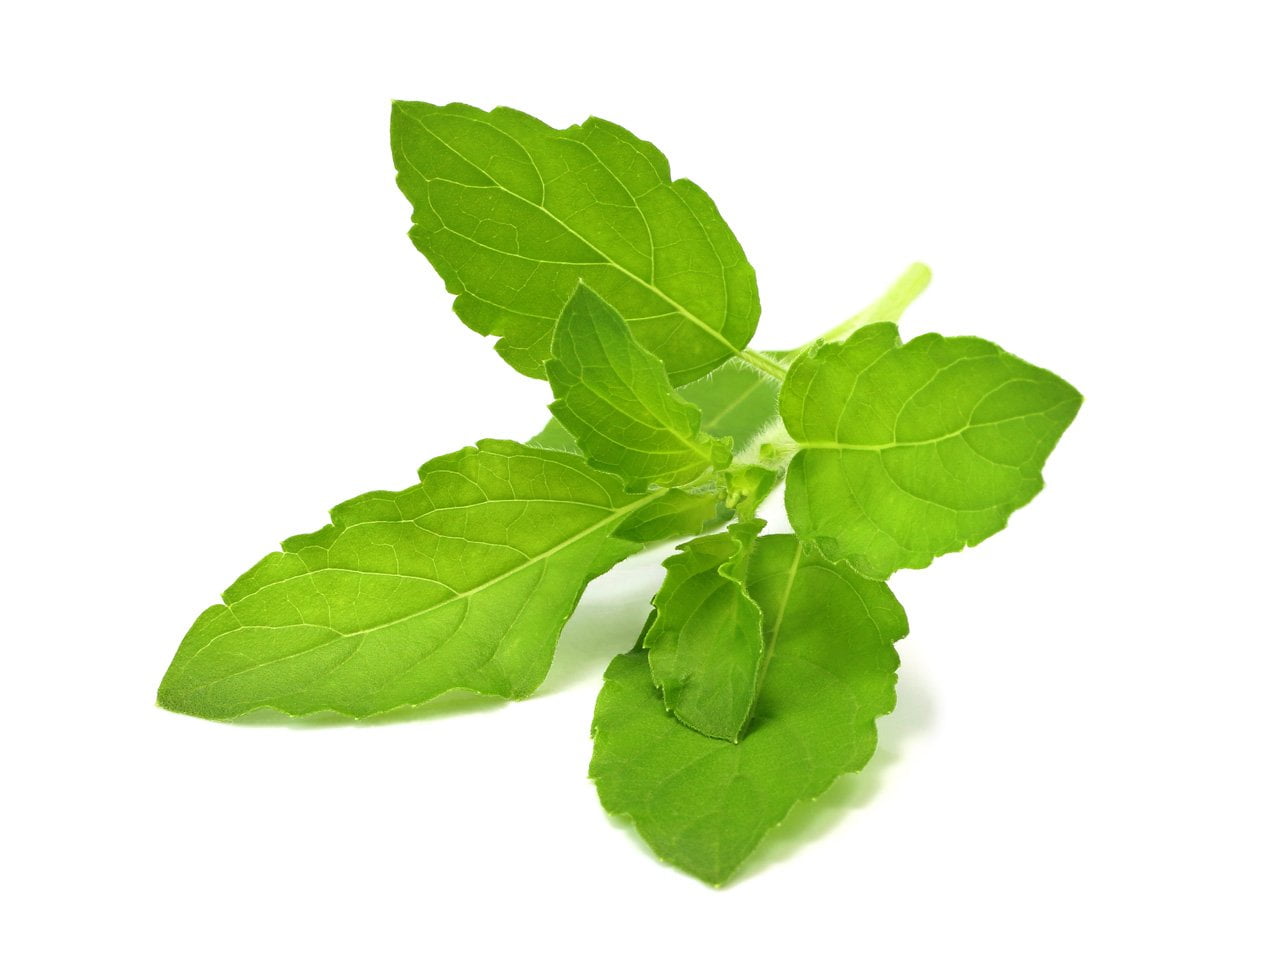 Types of Basil: Italian Large Leaf Basil